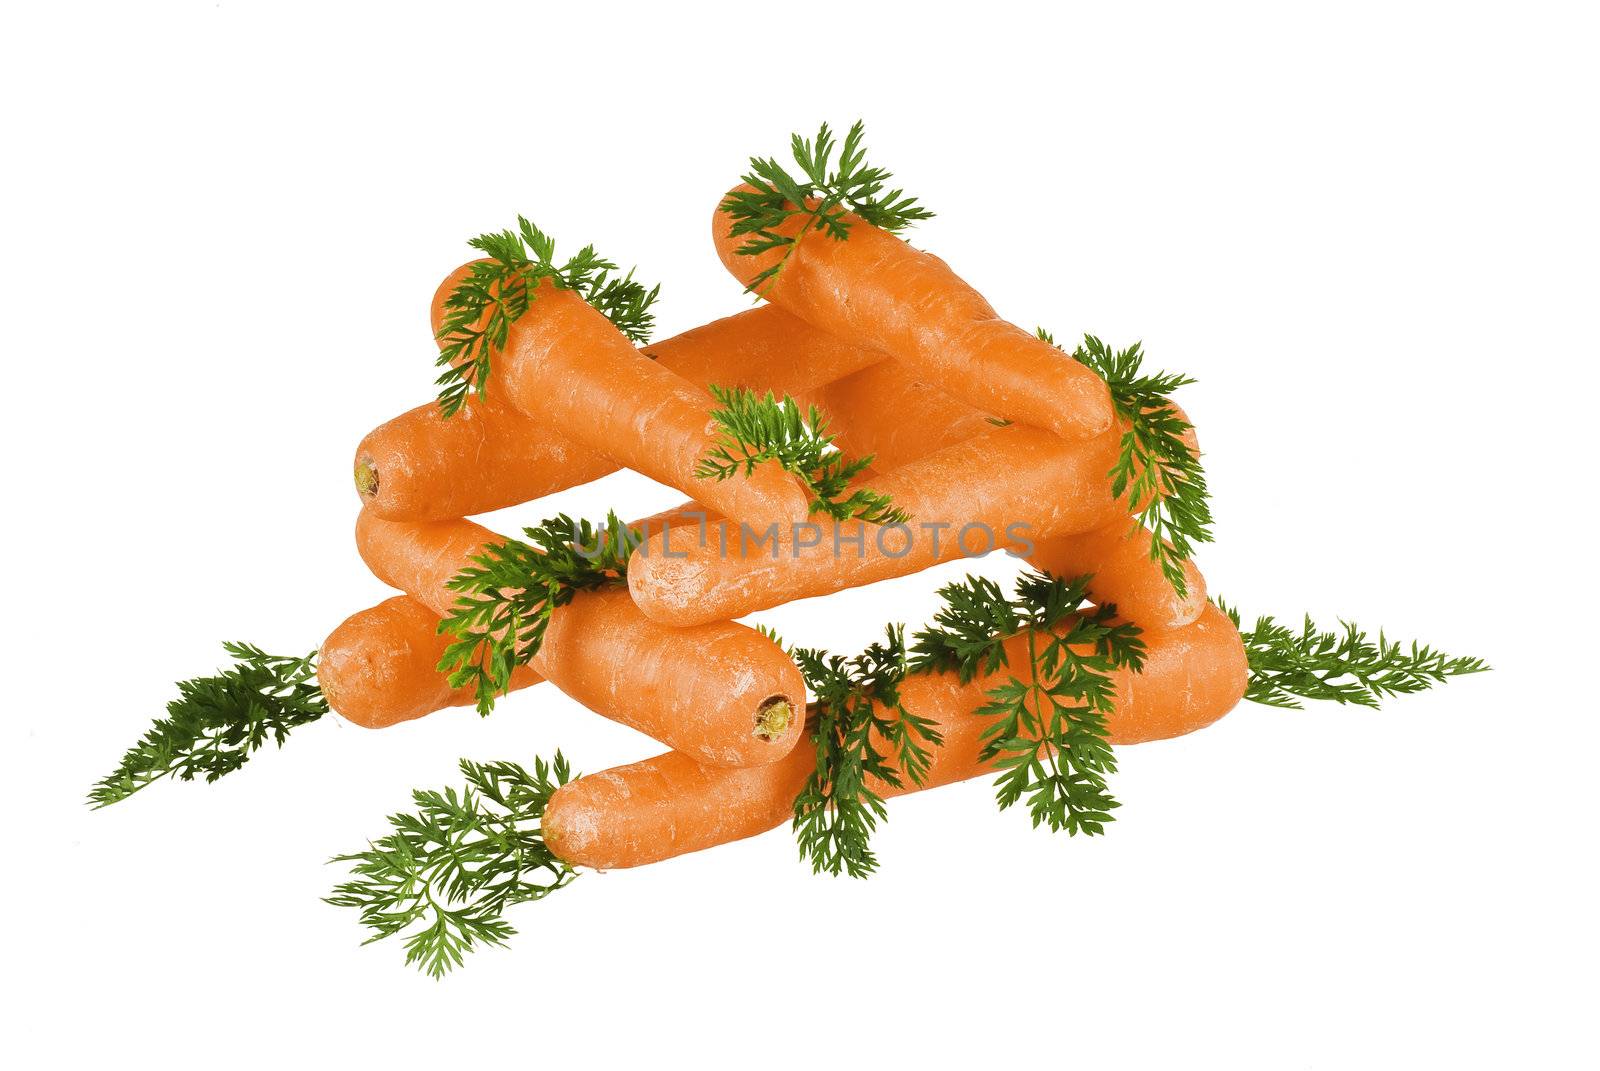 Carrots by caldix